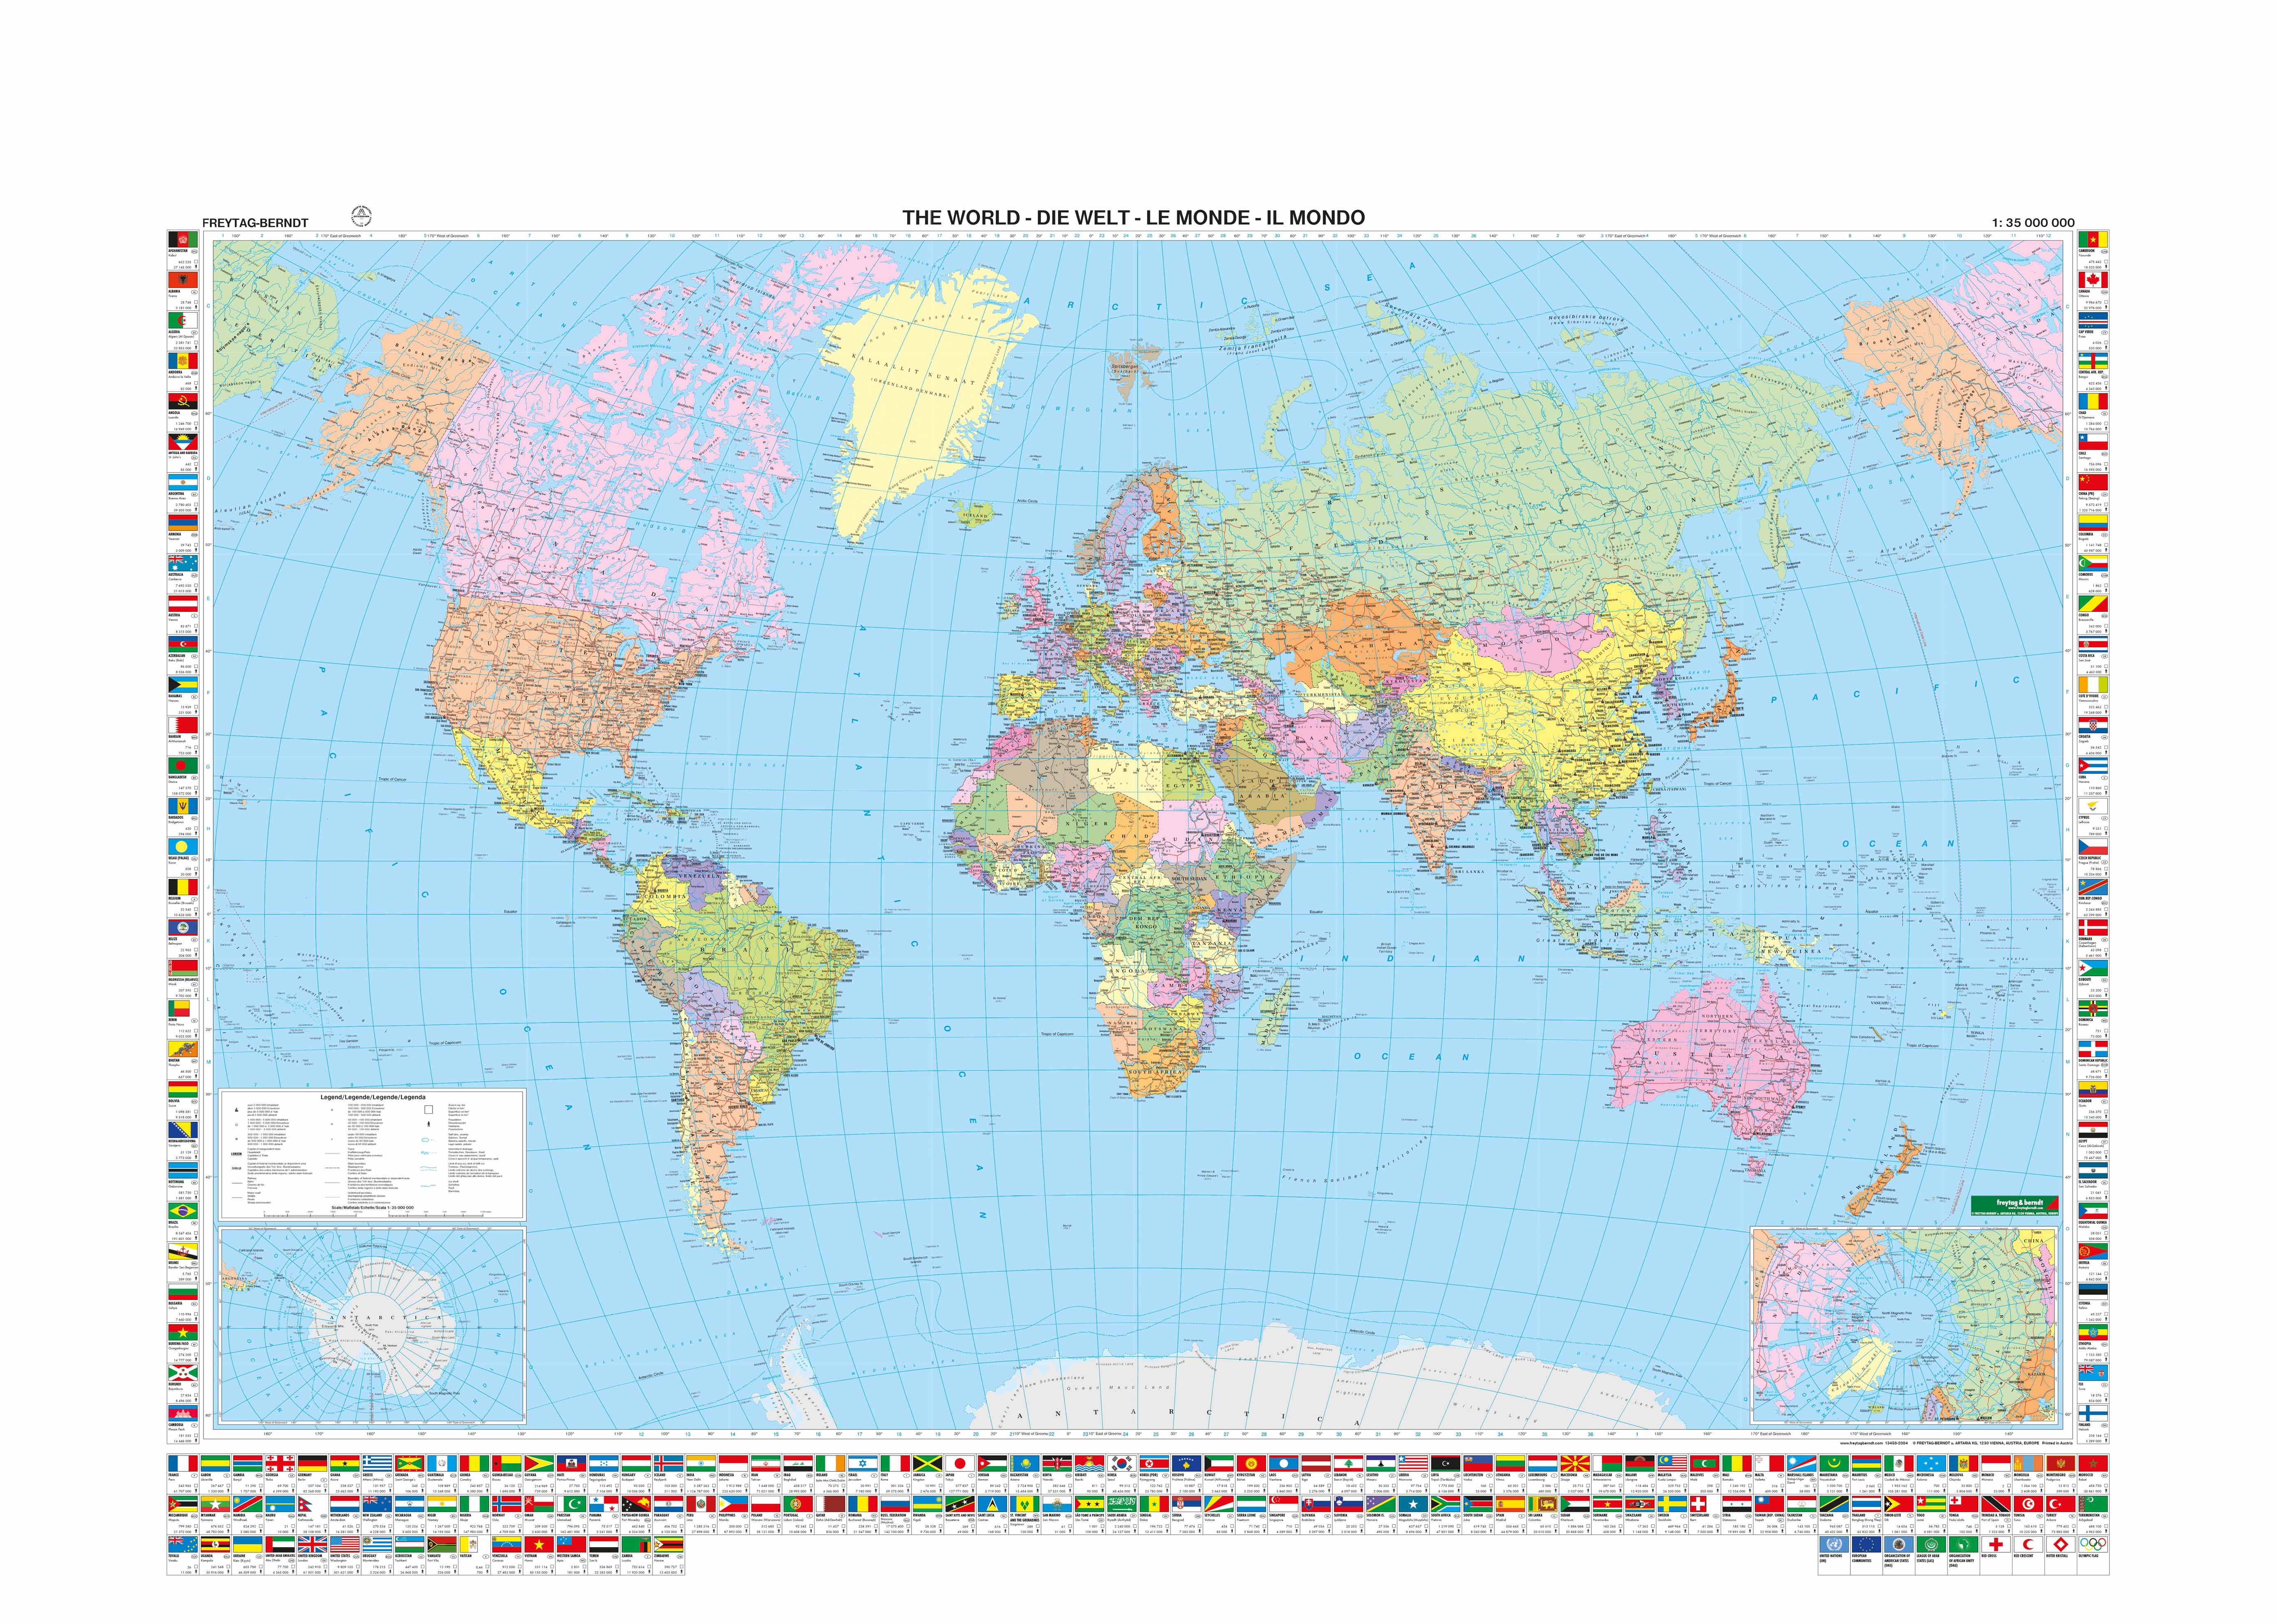 Freytag & Berndt nástěnná mapa Svět 1:35 mil. - politická, 150x100 cm